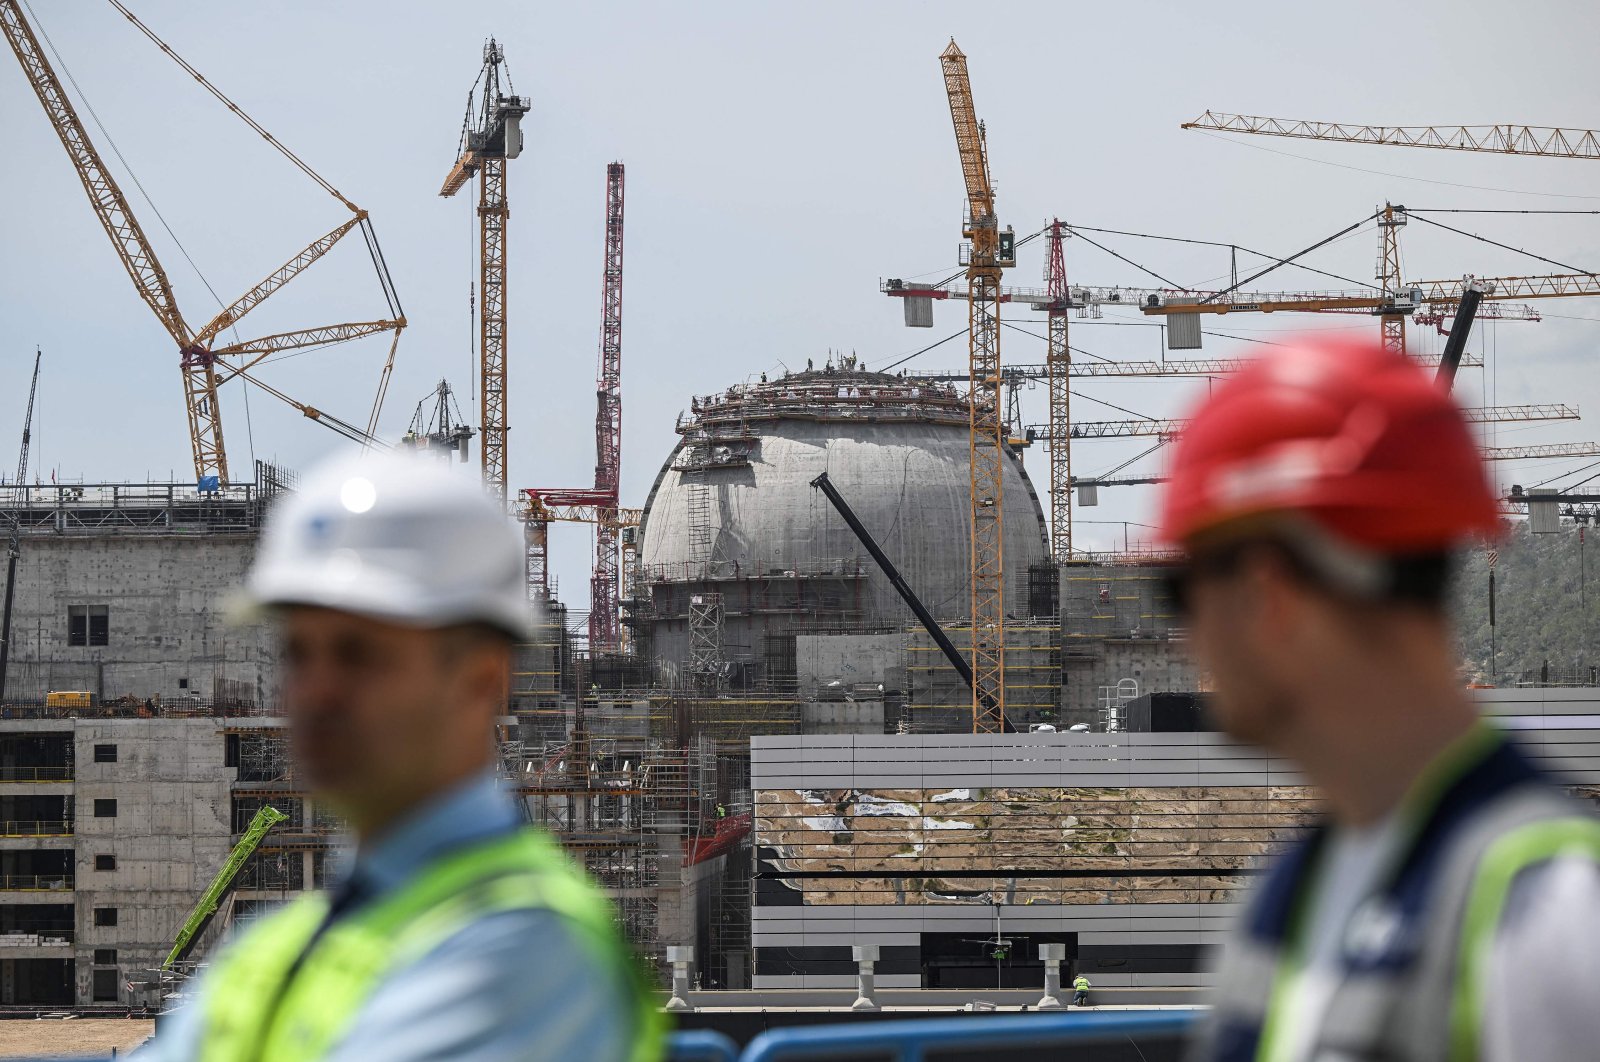 Pembangkit nuklir Akkuyu untuk mengkatalisasi ‘fase baru’ untuk Türkiye: kepala IAEA